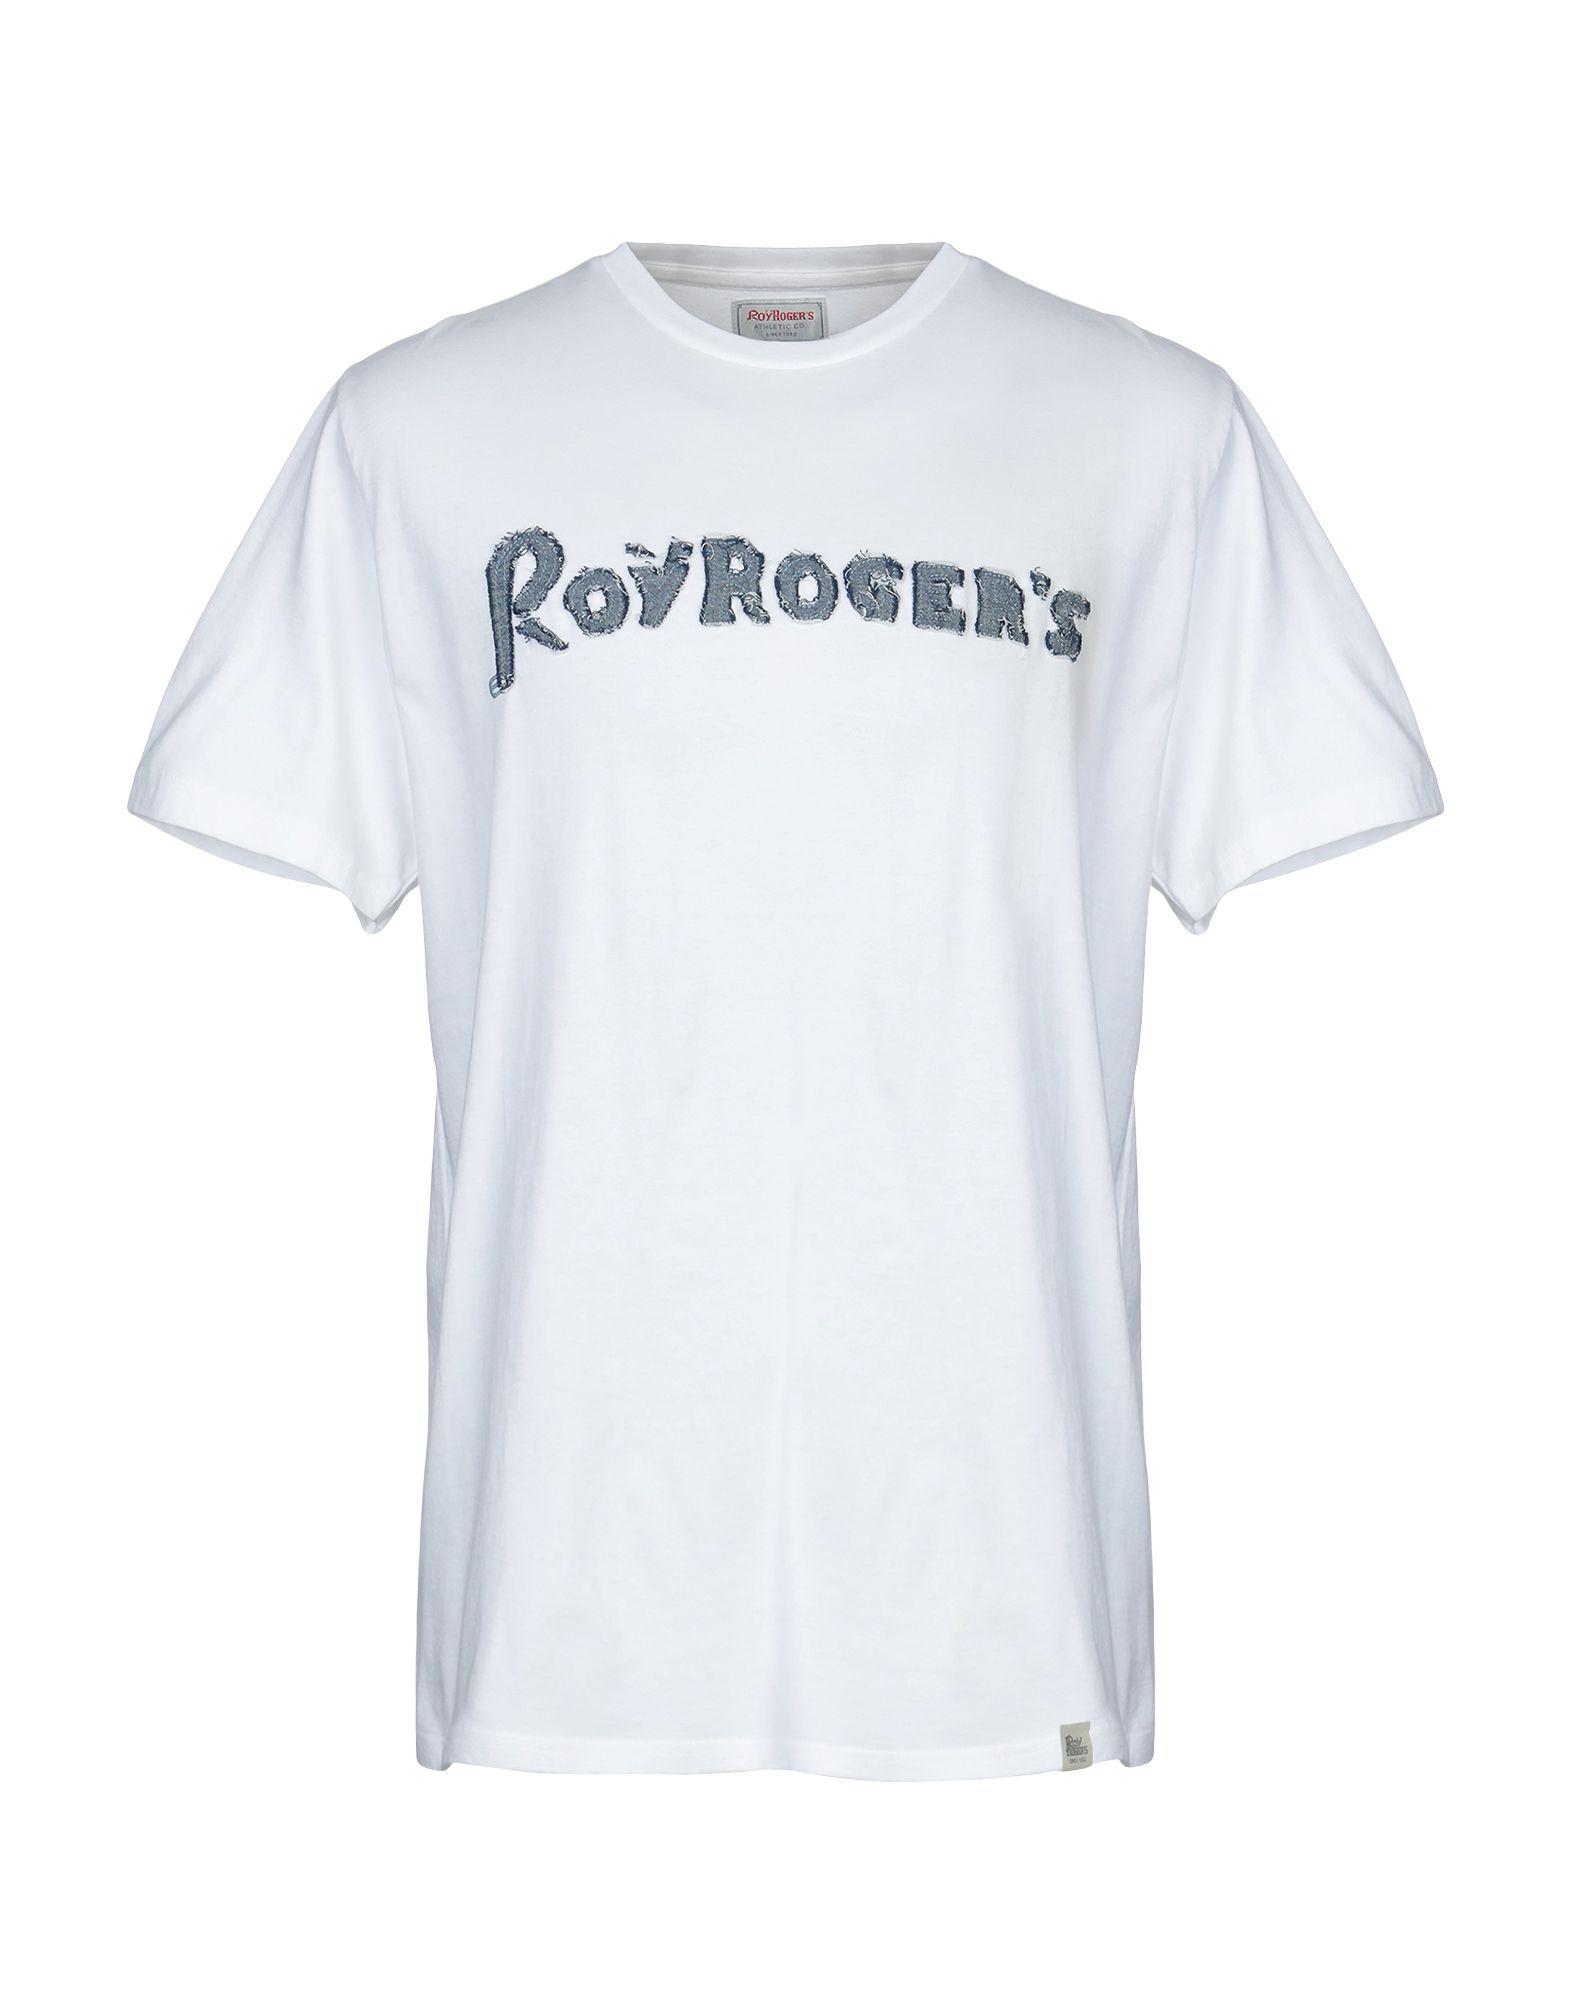 Roy Rogers T-shirt in White for Men - Lyst